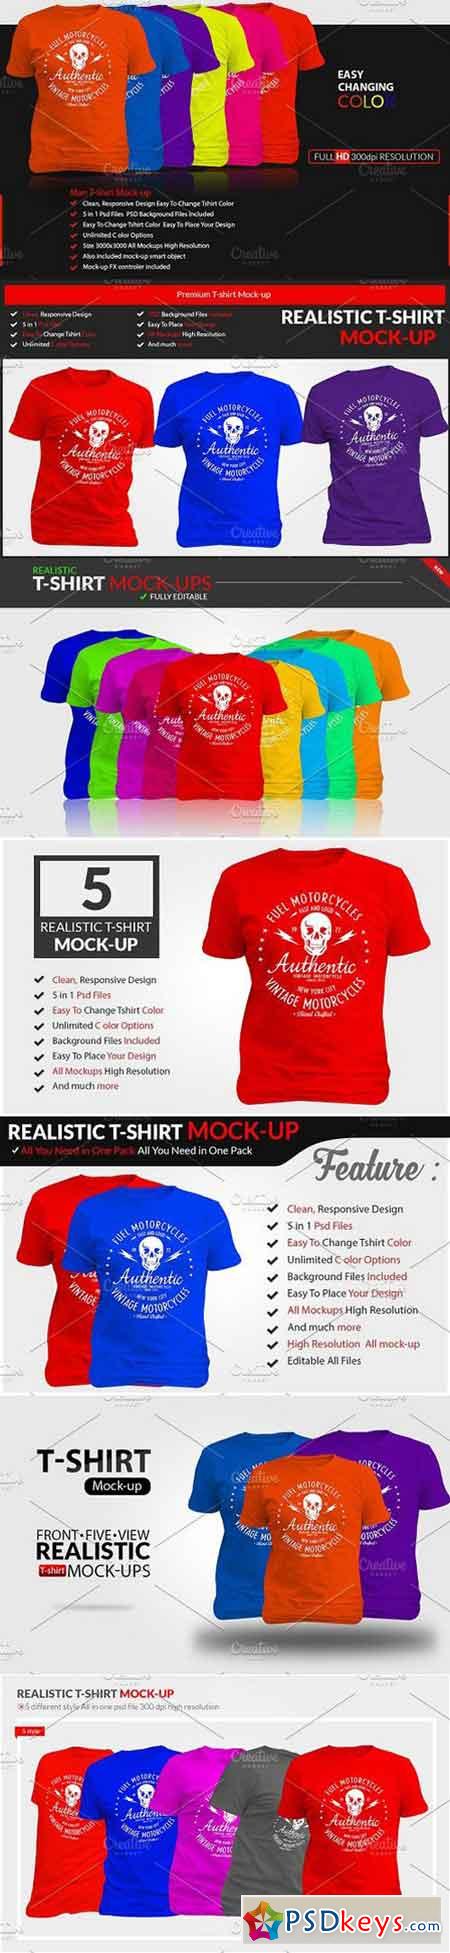 Realistic Tshirt Mockup v.1 1322253 » Free Download Photoshop Vector ...